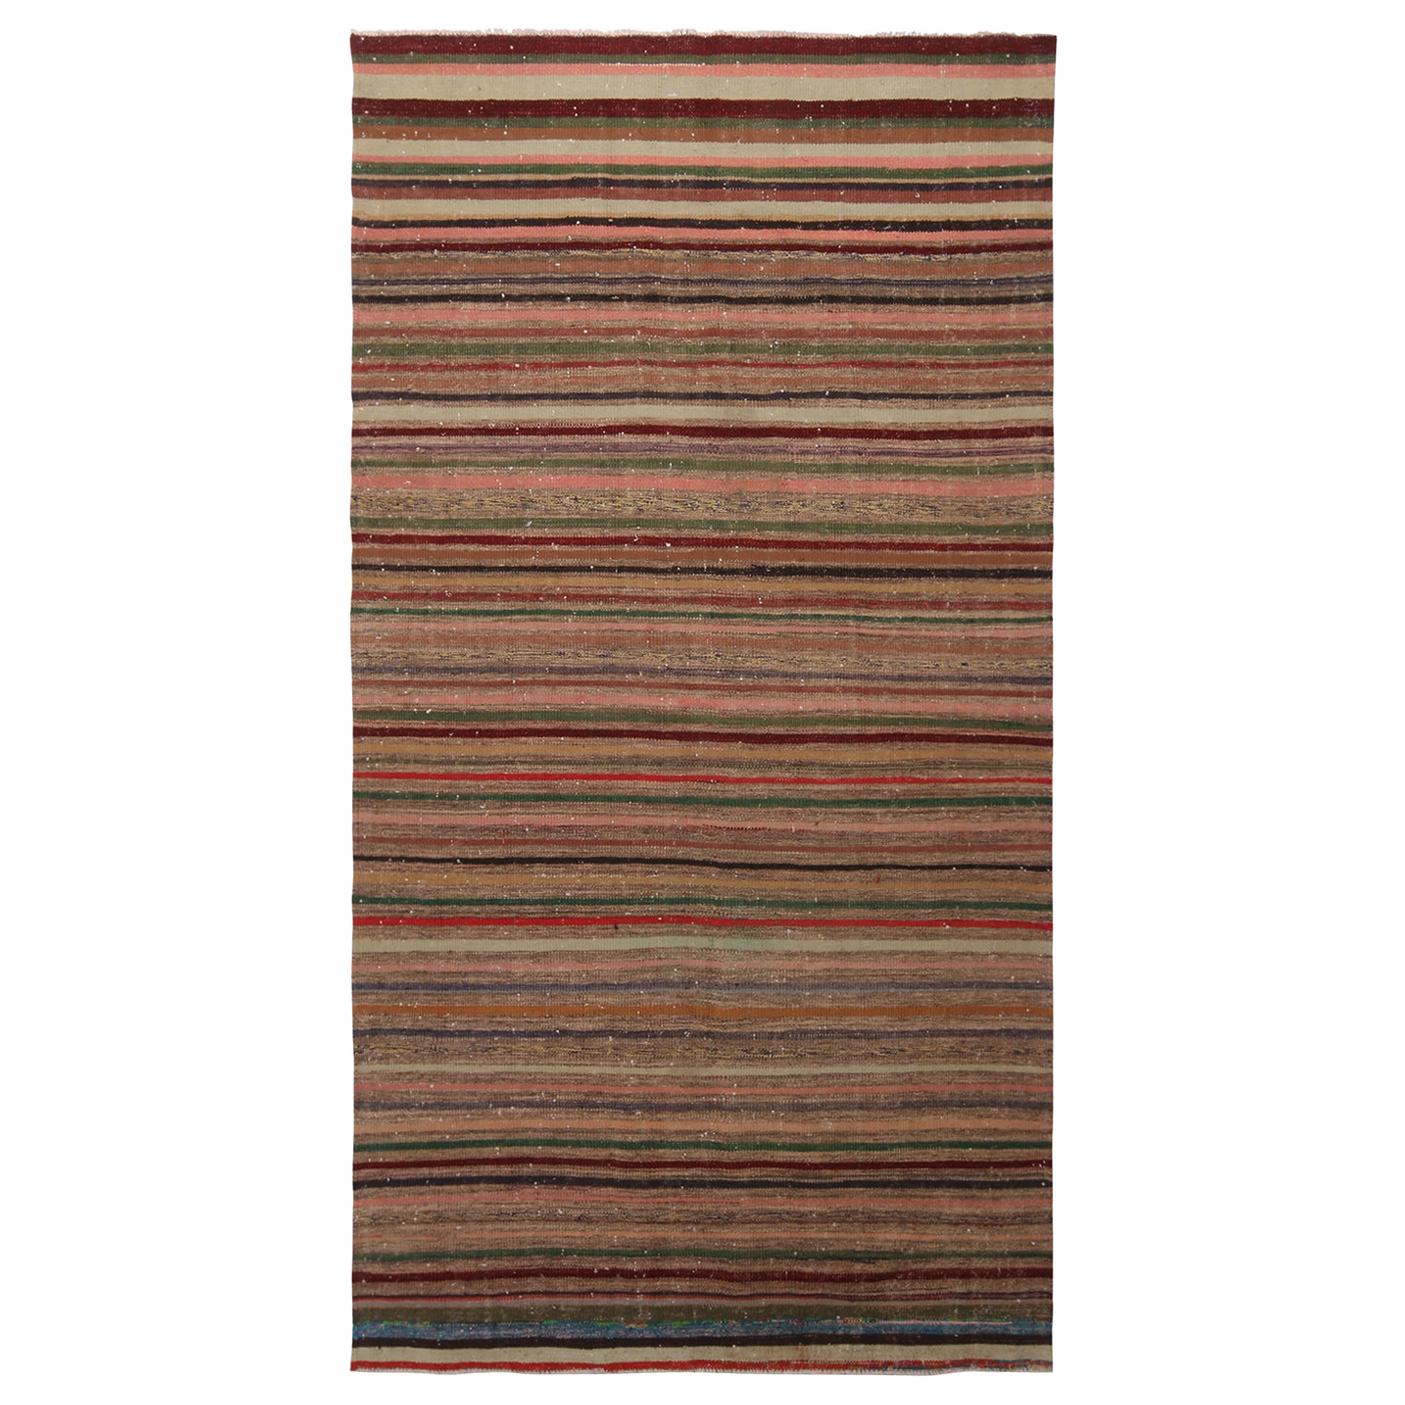 Vintage Striped Beige Brown and Multi-Color Wool Kilim Rug by Rug & Kilim For Sale